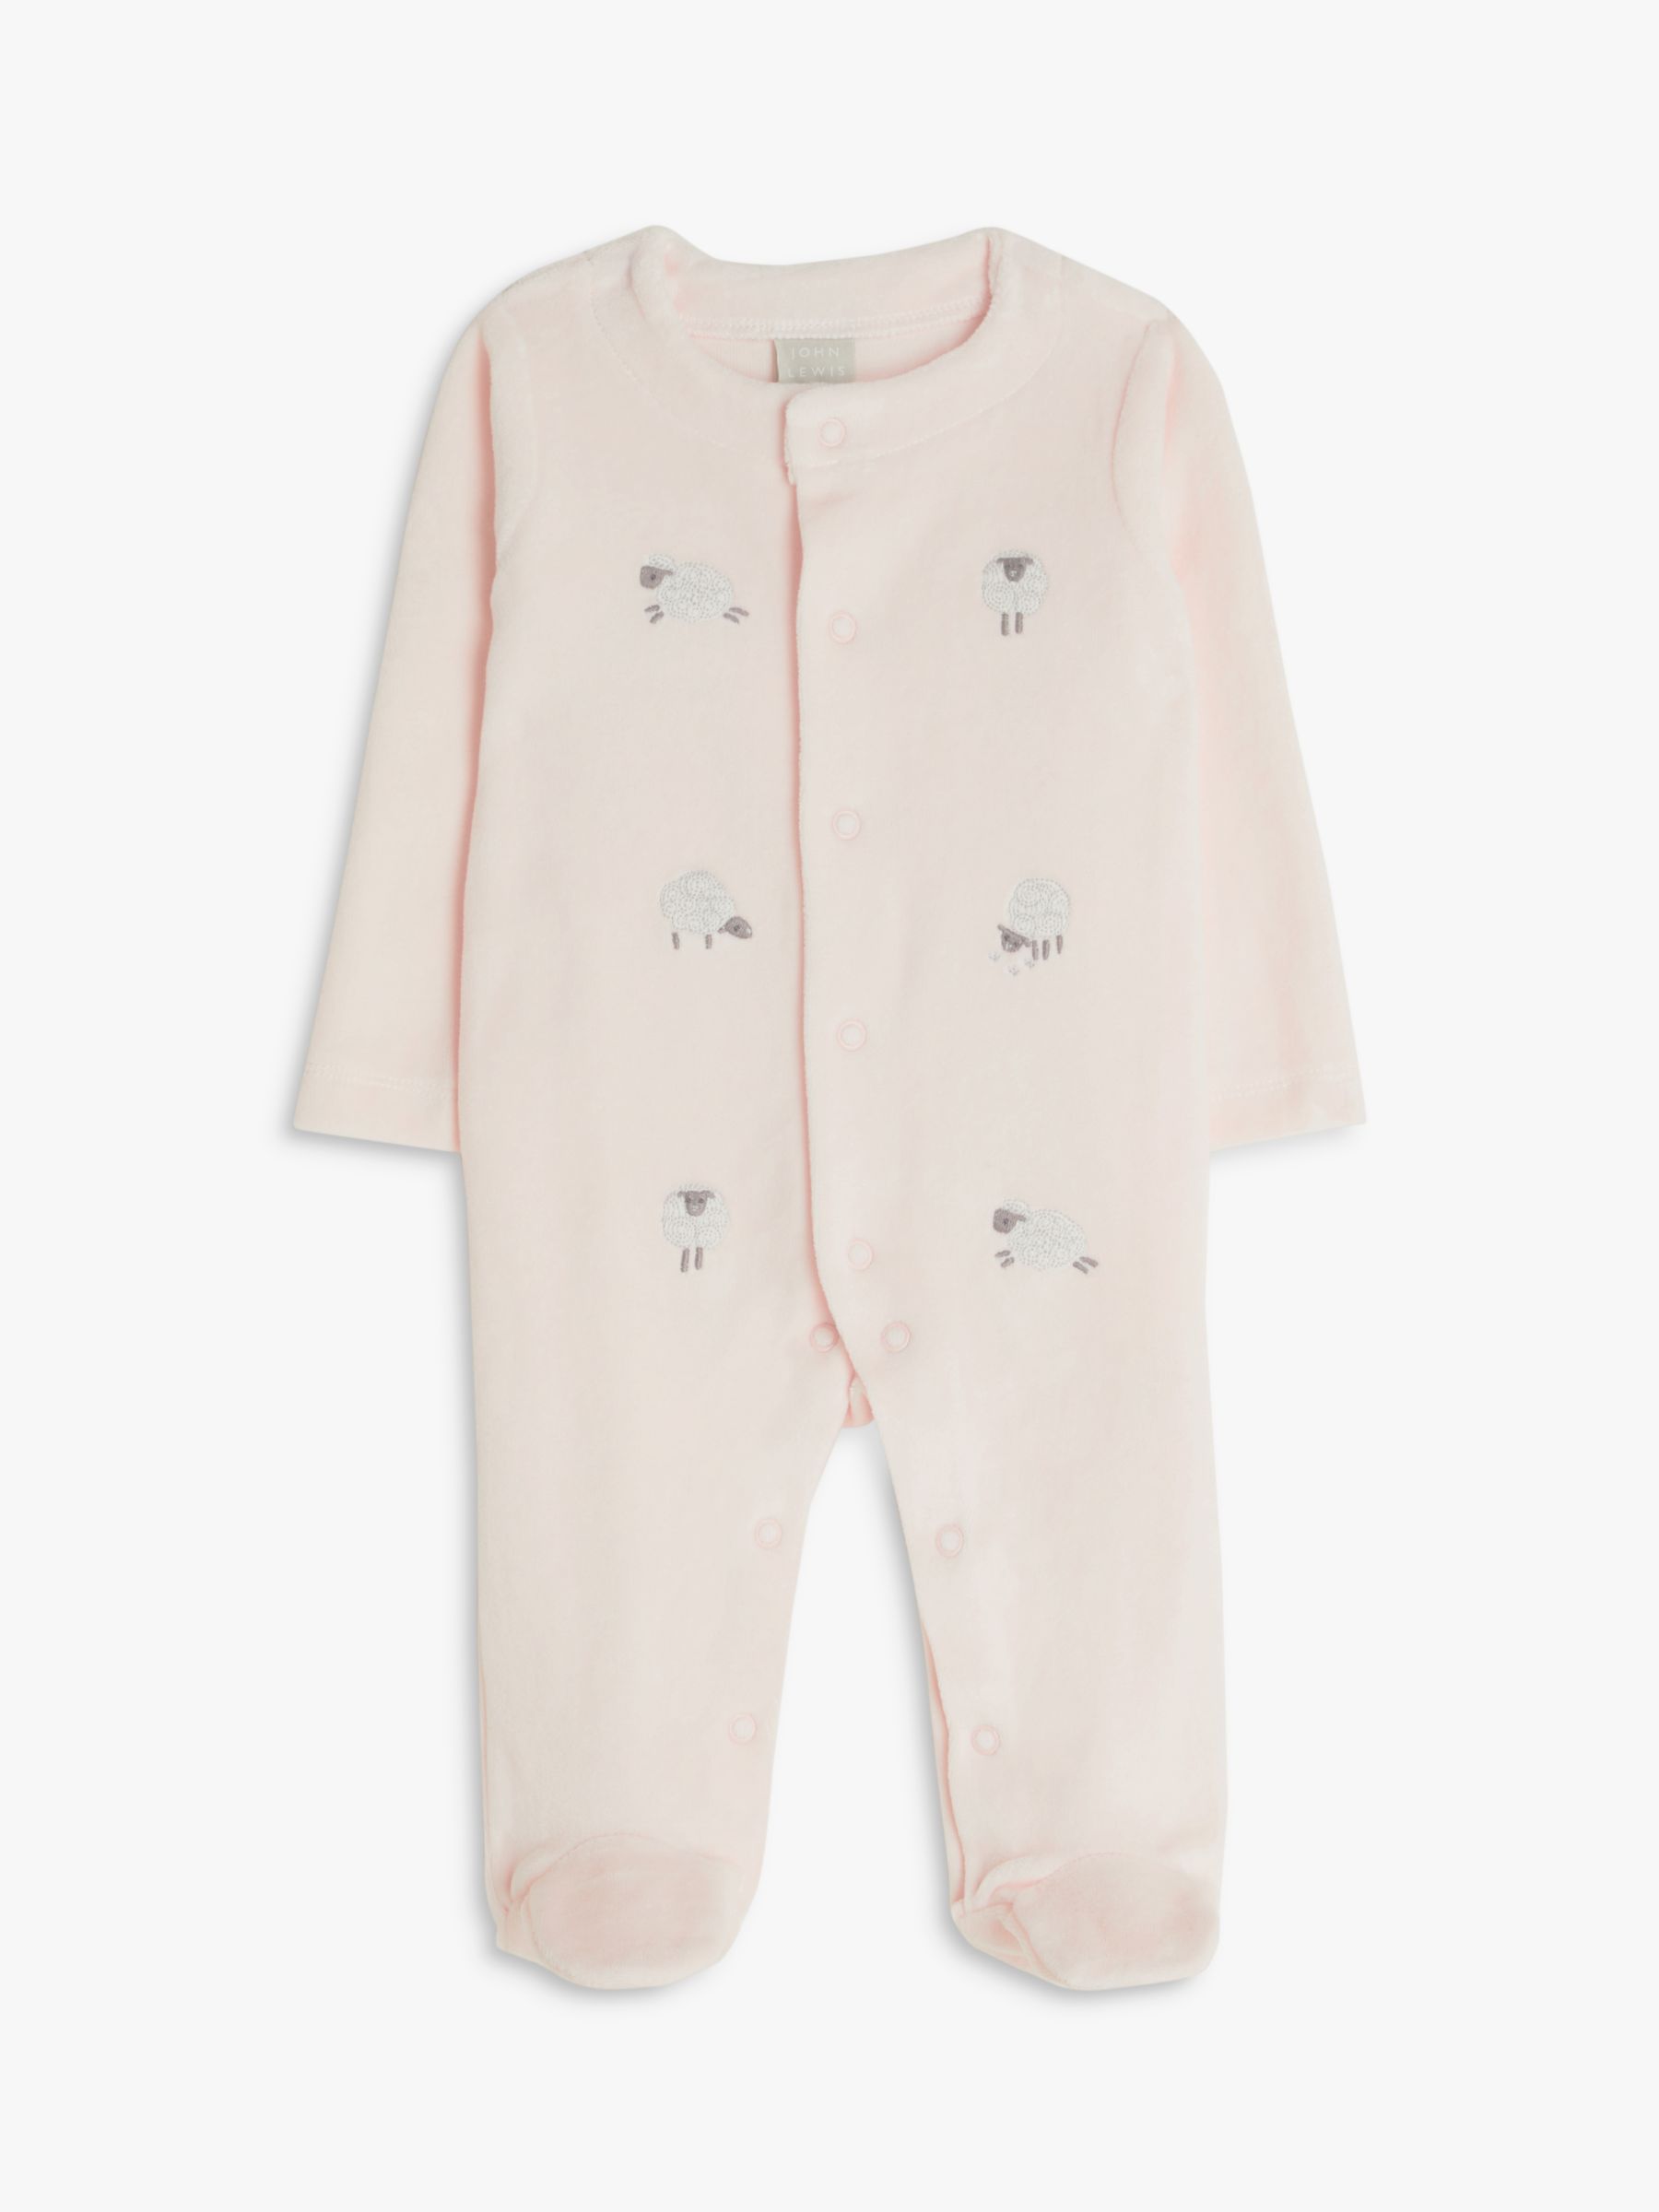 John Lewis Baby Sheep Velour Sleepsuit, Pink, Tiny baby